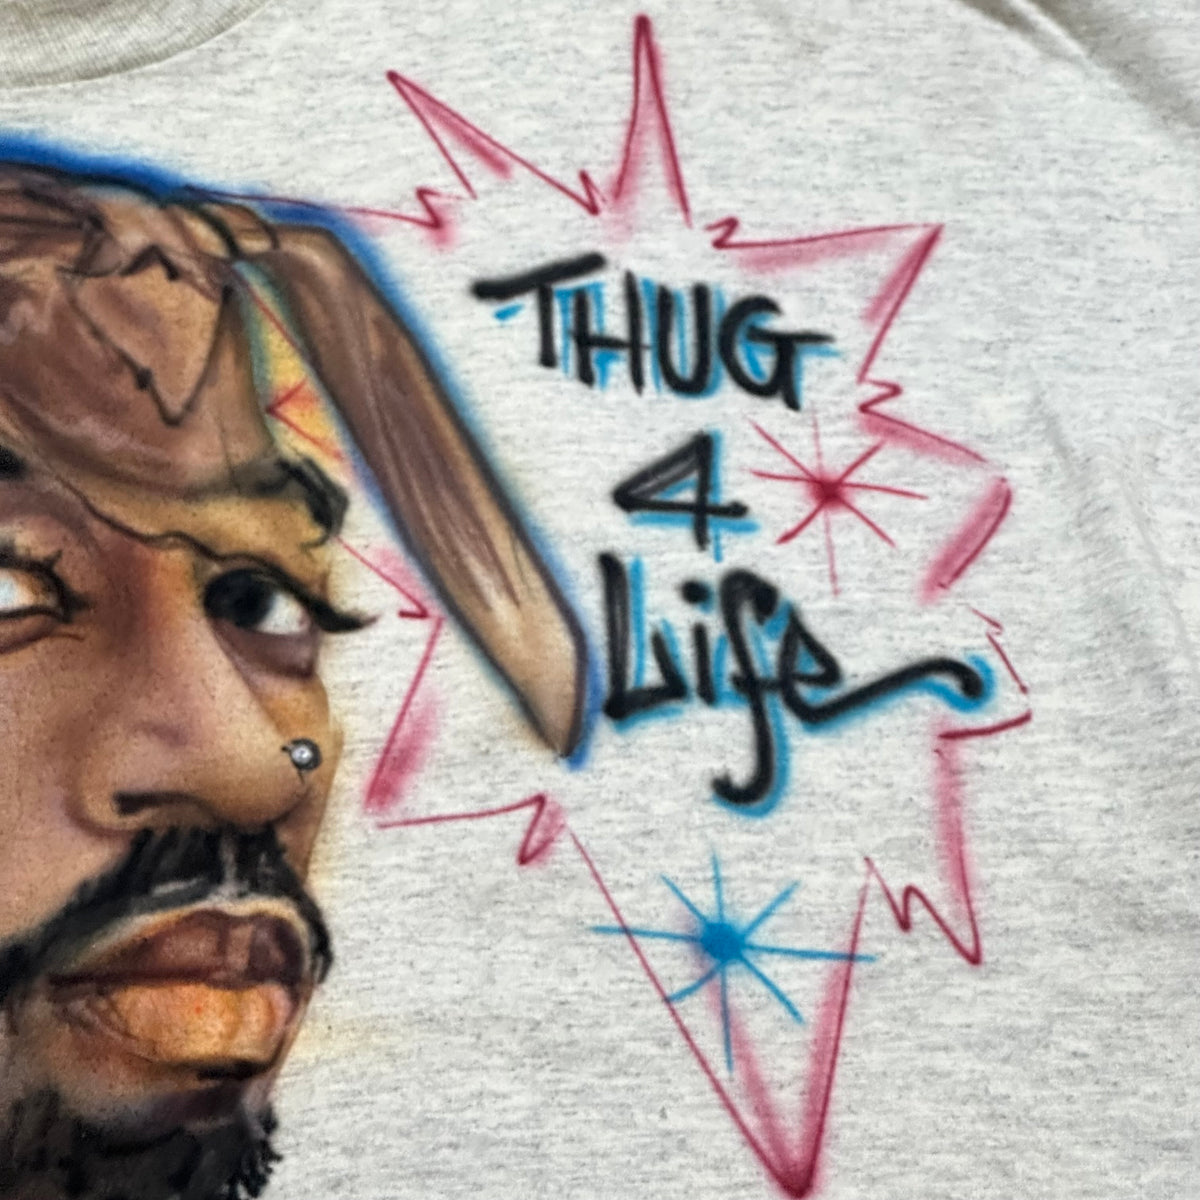 Vintage Tupac Shakur Air Brush 2pac Tee 'Thug 4 Lyfe' shirt